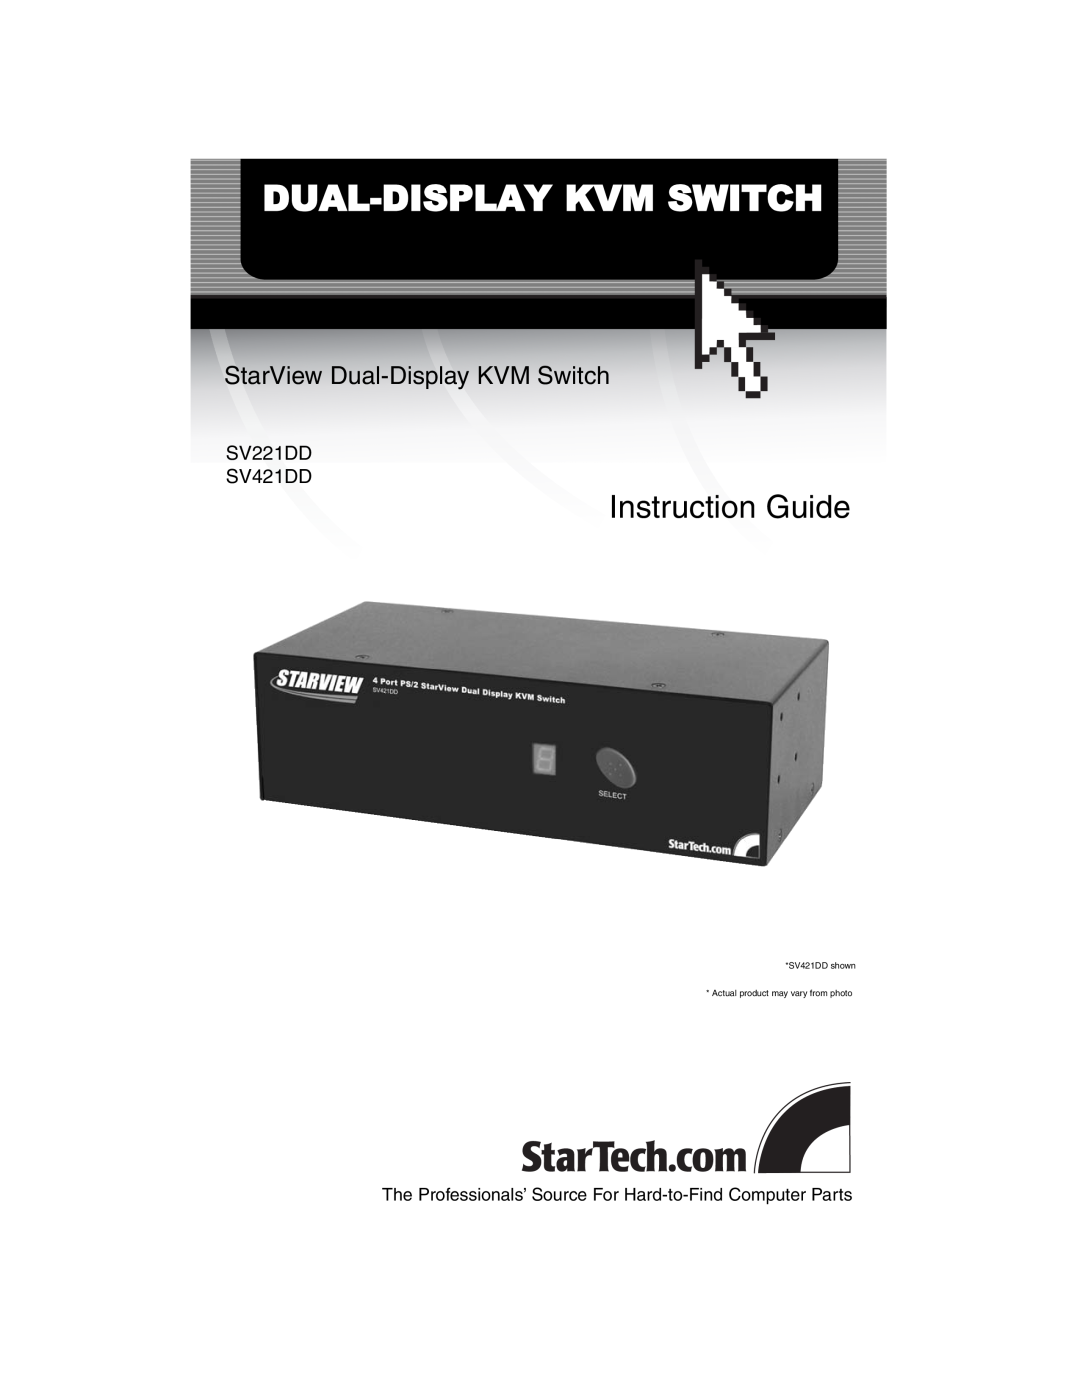 StarTech.com manual Dual-Display Kvm Switch, Instruction Guide, StarView Dual-Display KVM Switch, SV221DD SV421DD 